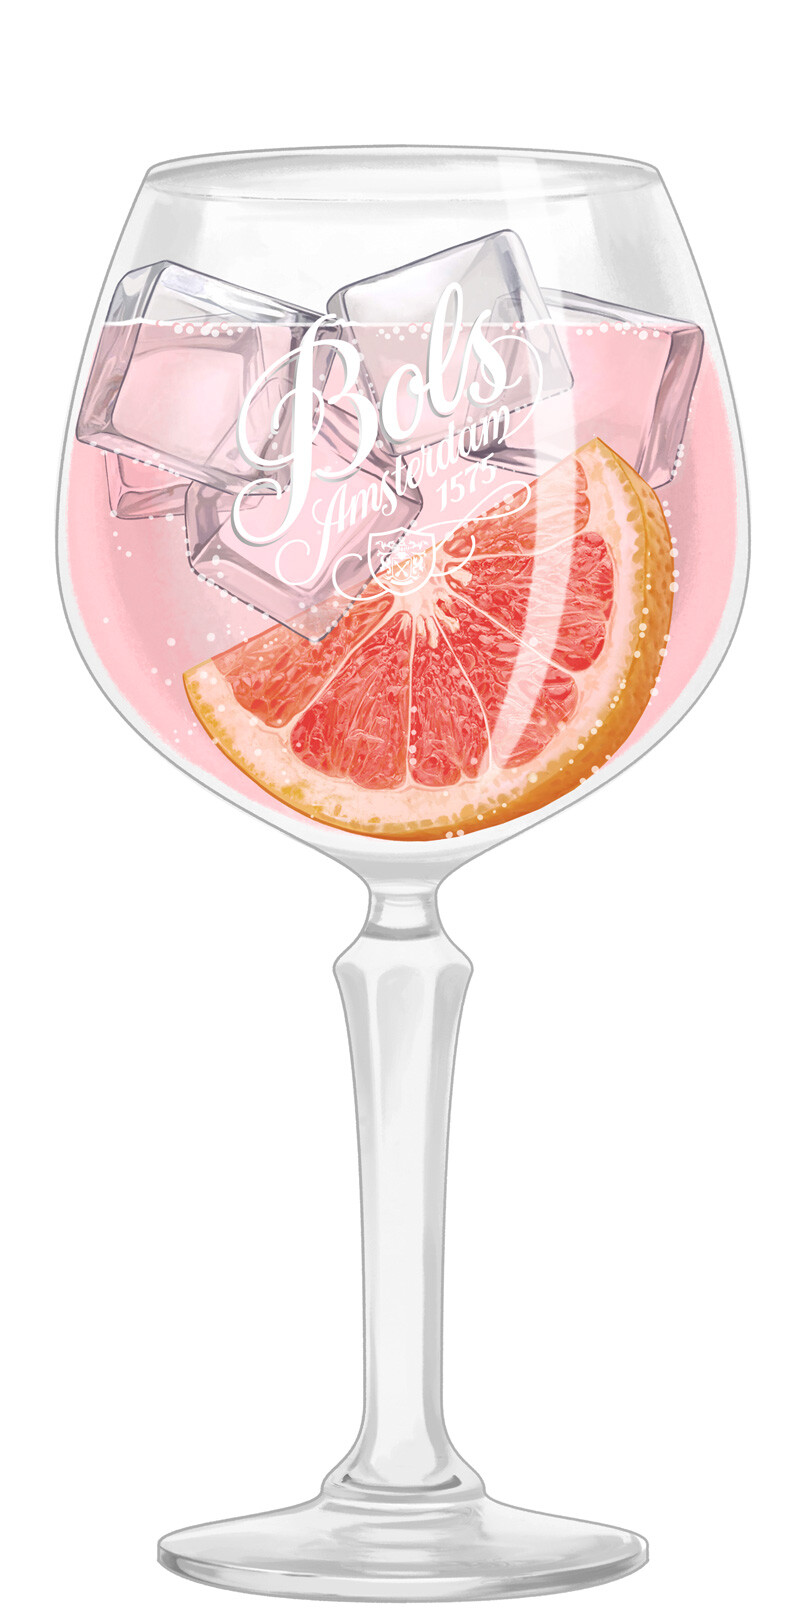 oculus-illustration-drink-aperitiv-grapefruit